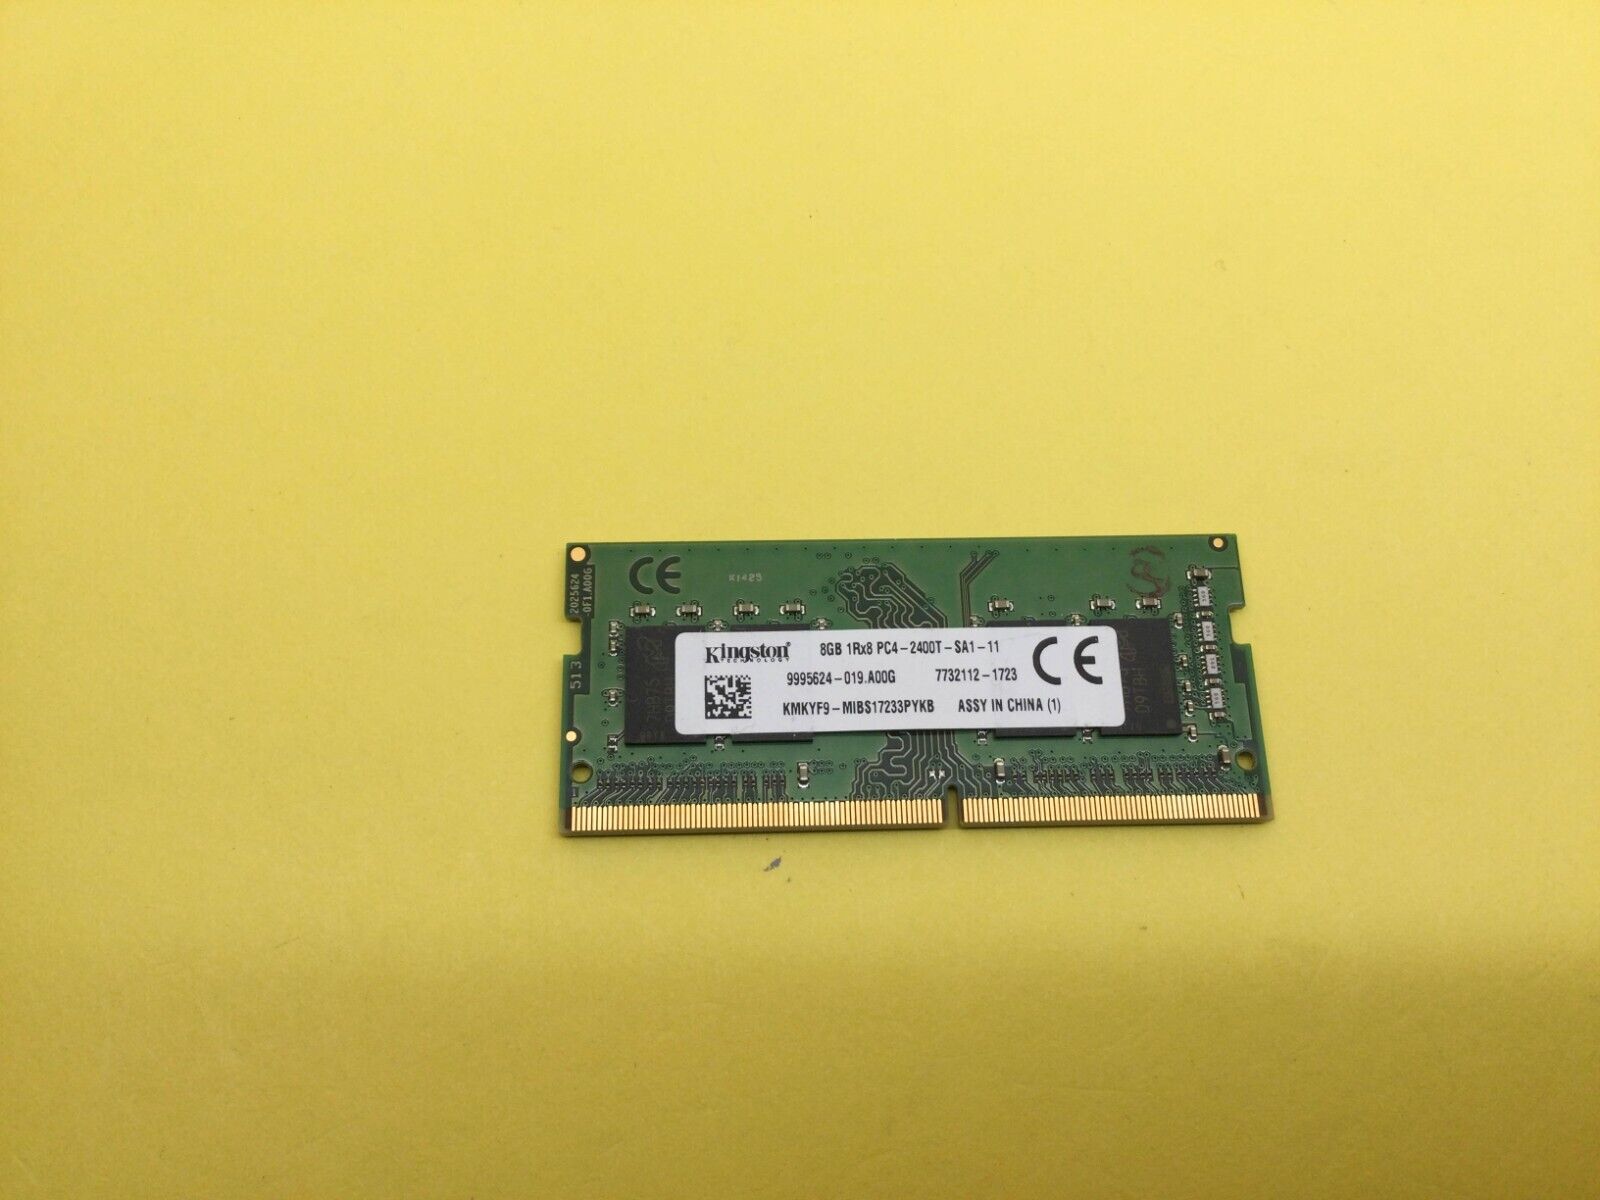 Kingston 8GB (1x8GB) 1RX8 PC4-2400T DDR4 SODIMM Laptop Memory KMKYF9-MIB